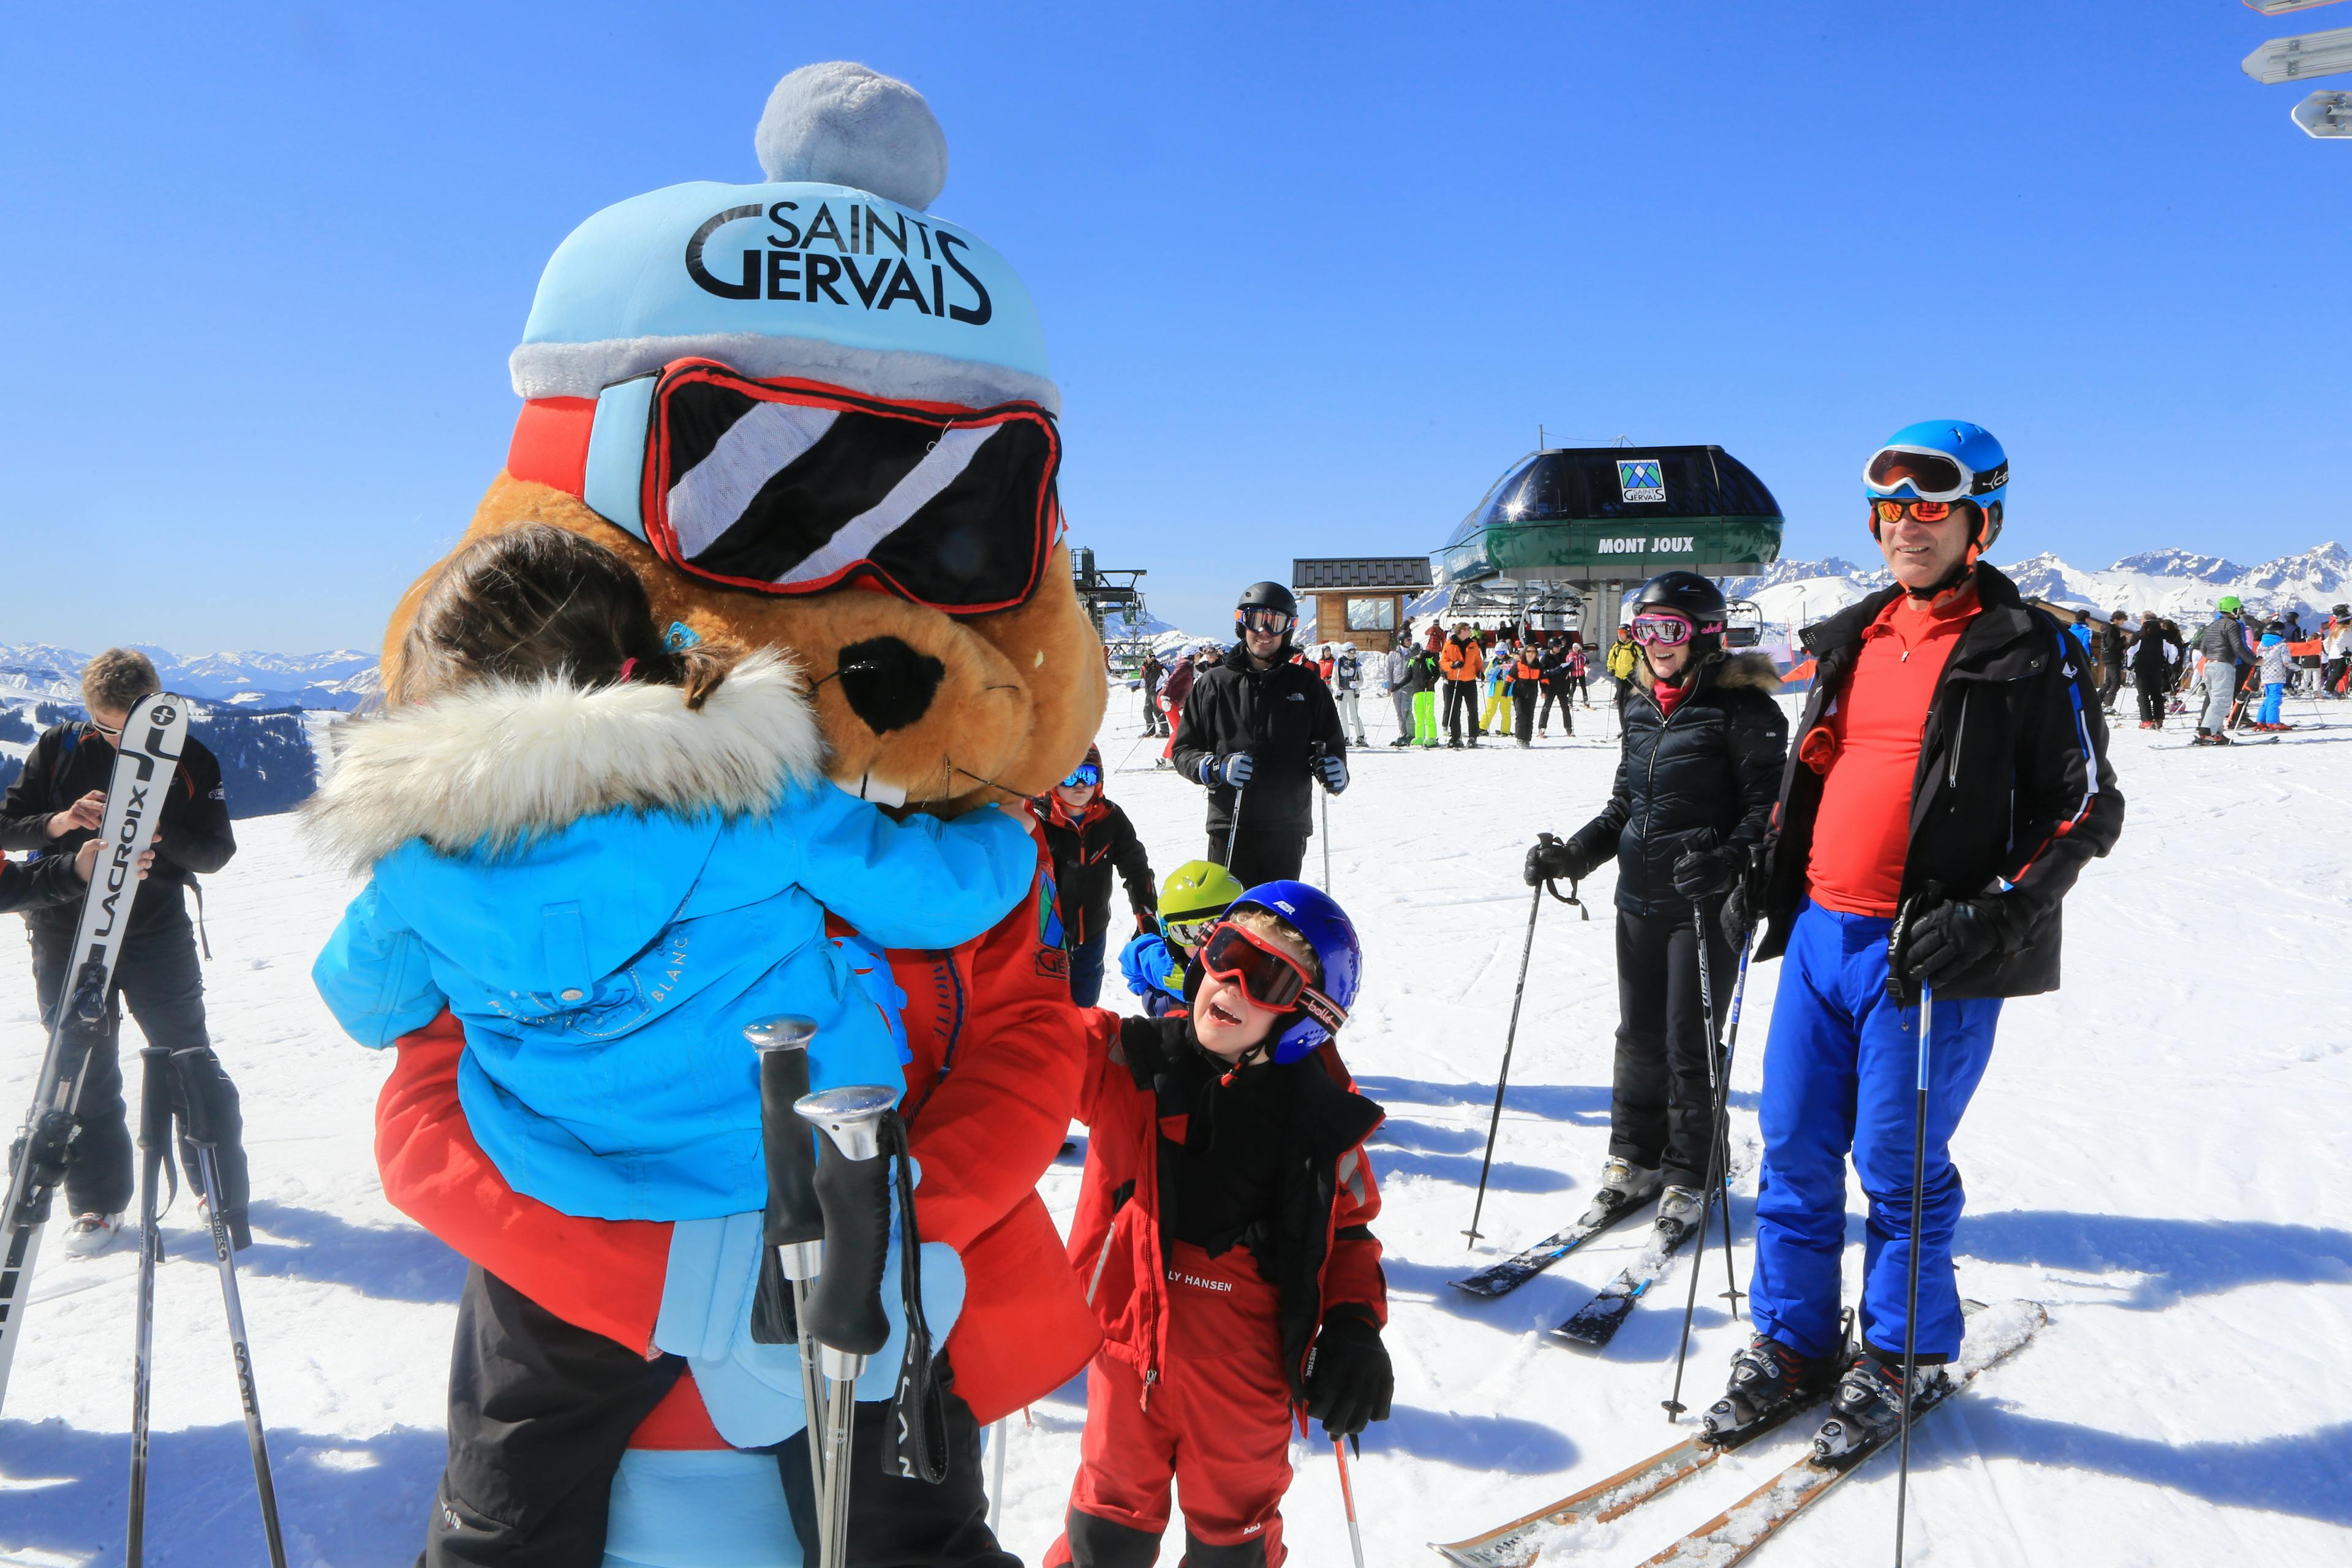 Saint Gervais bear mascot entertaining children skiers on holiday